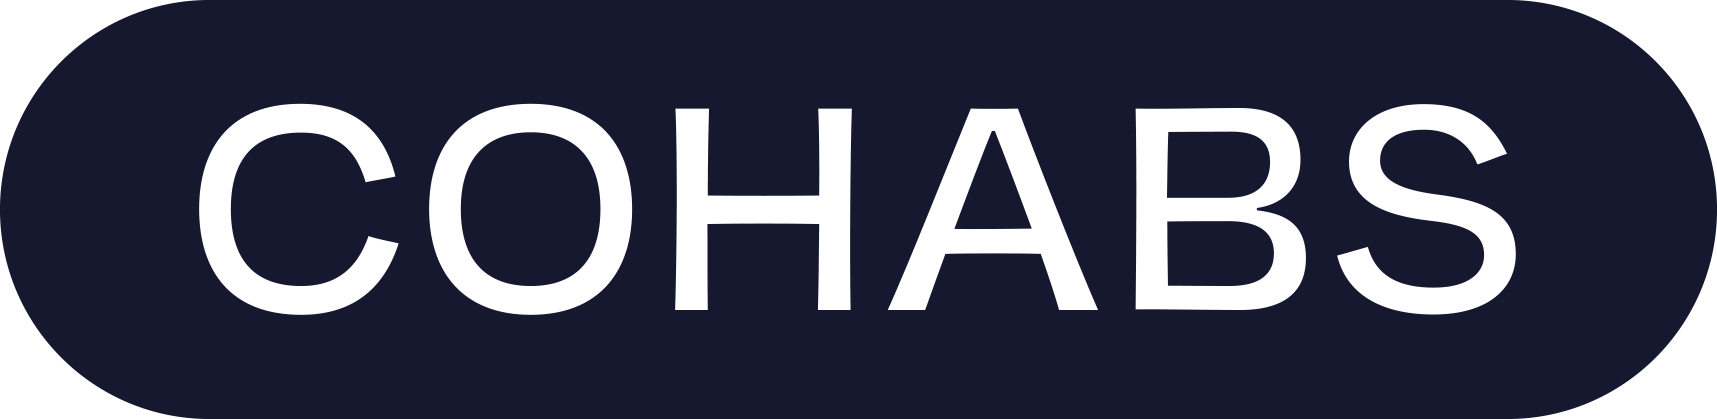 COHABS logo